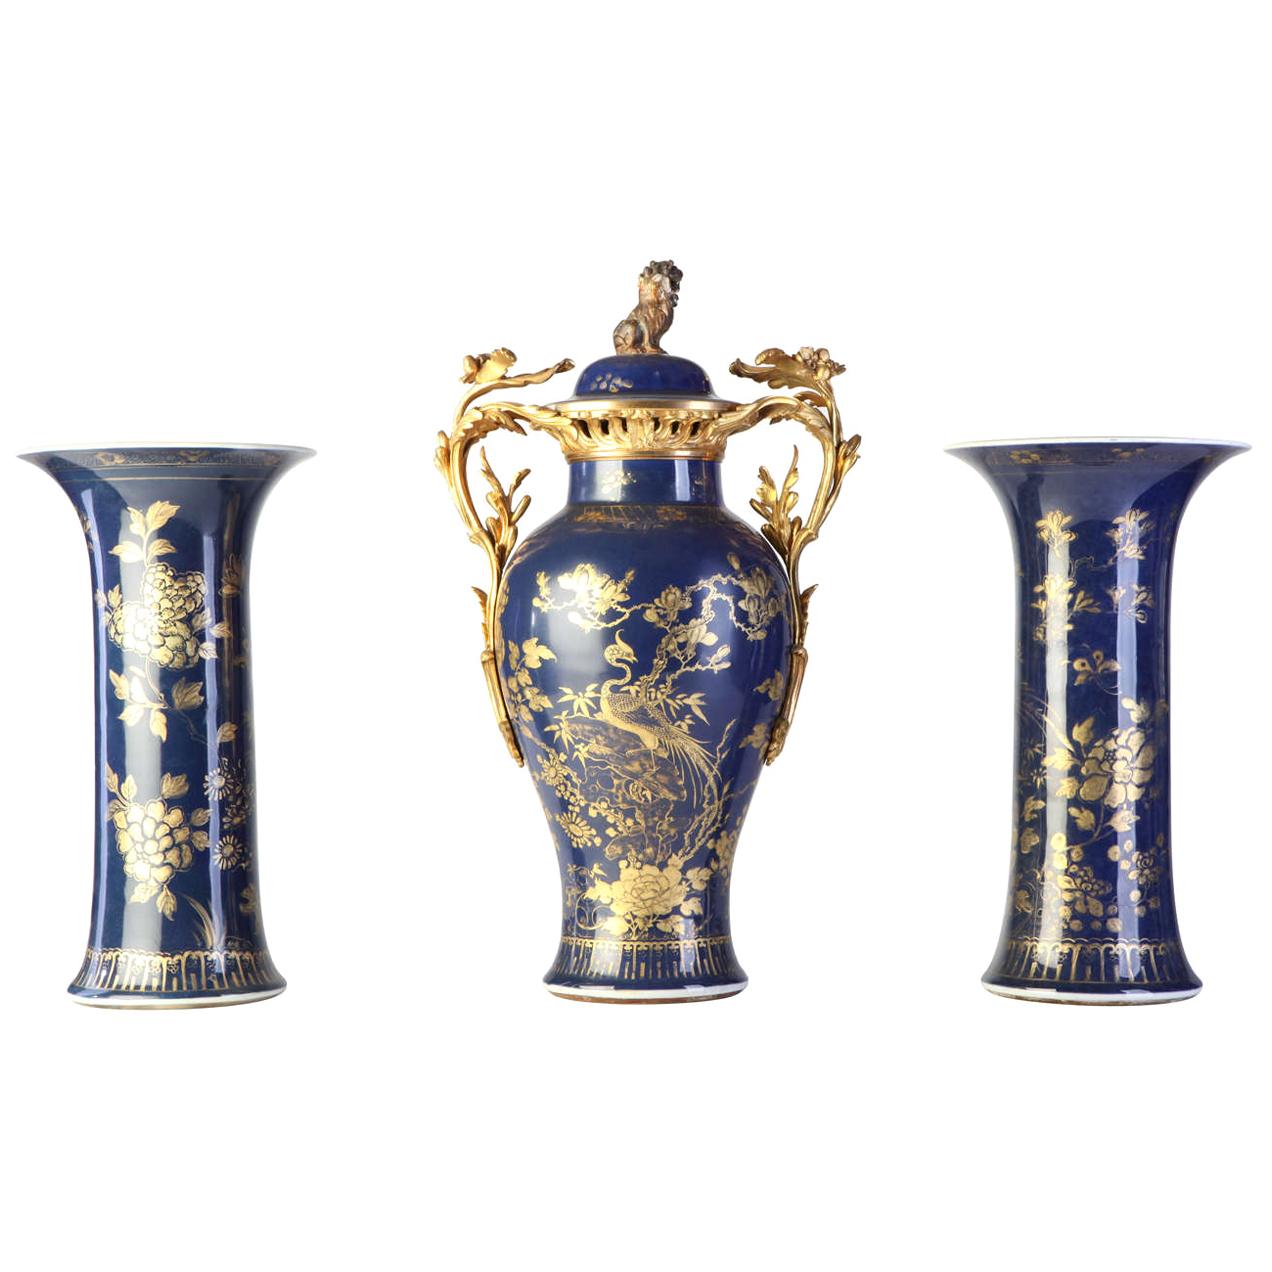 Chinese 18th Century Powder Blue Gilt-Decorated Set of Three Vases